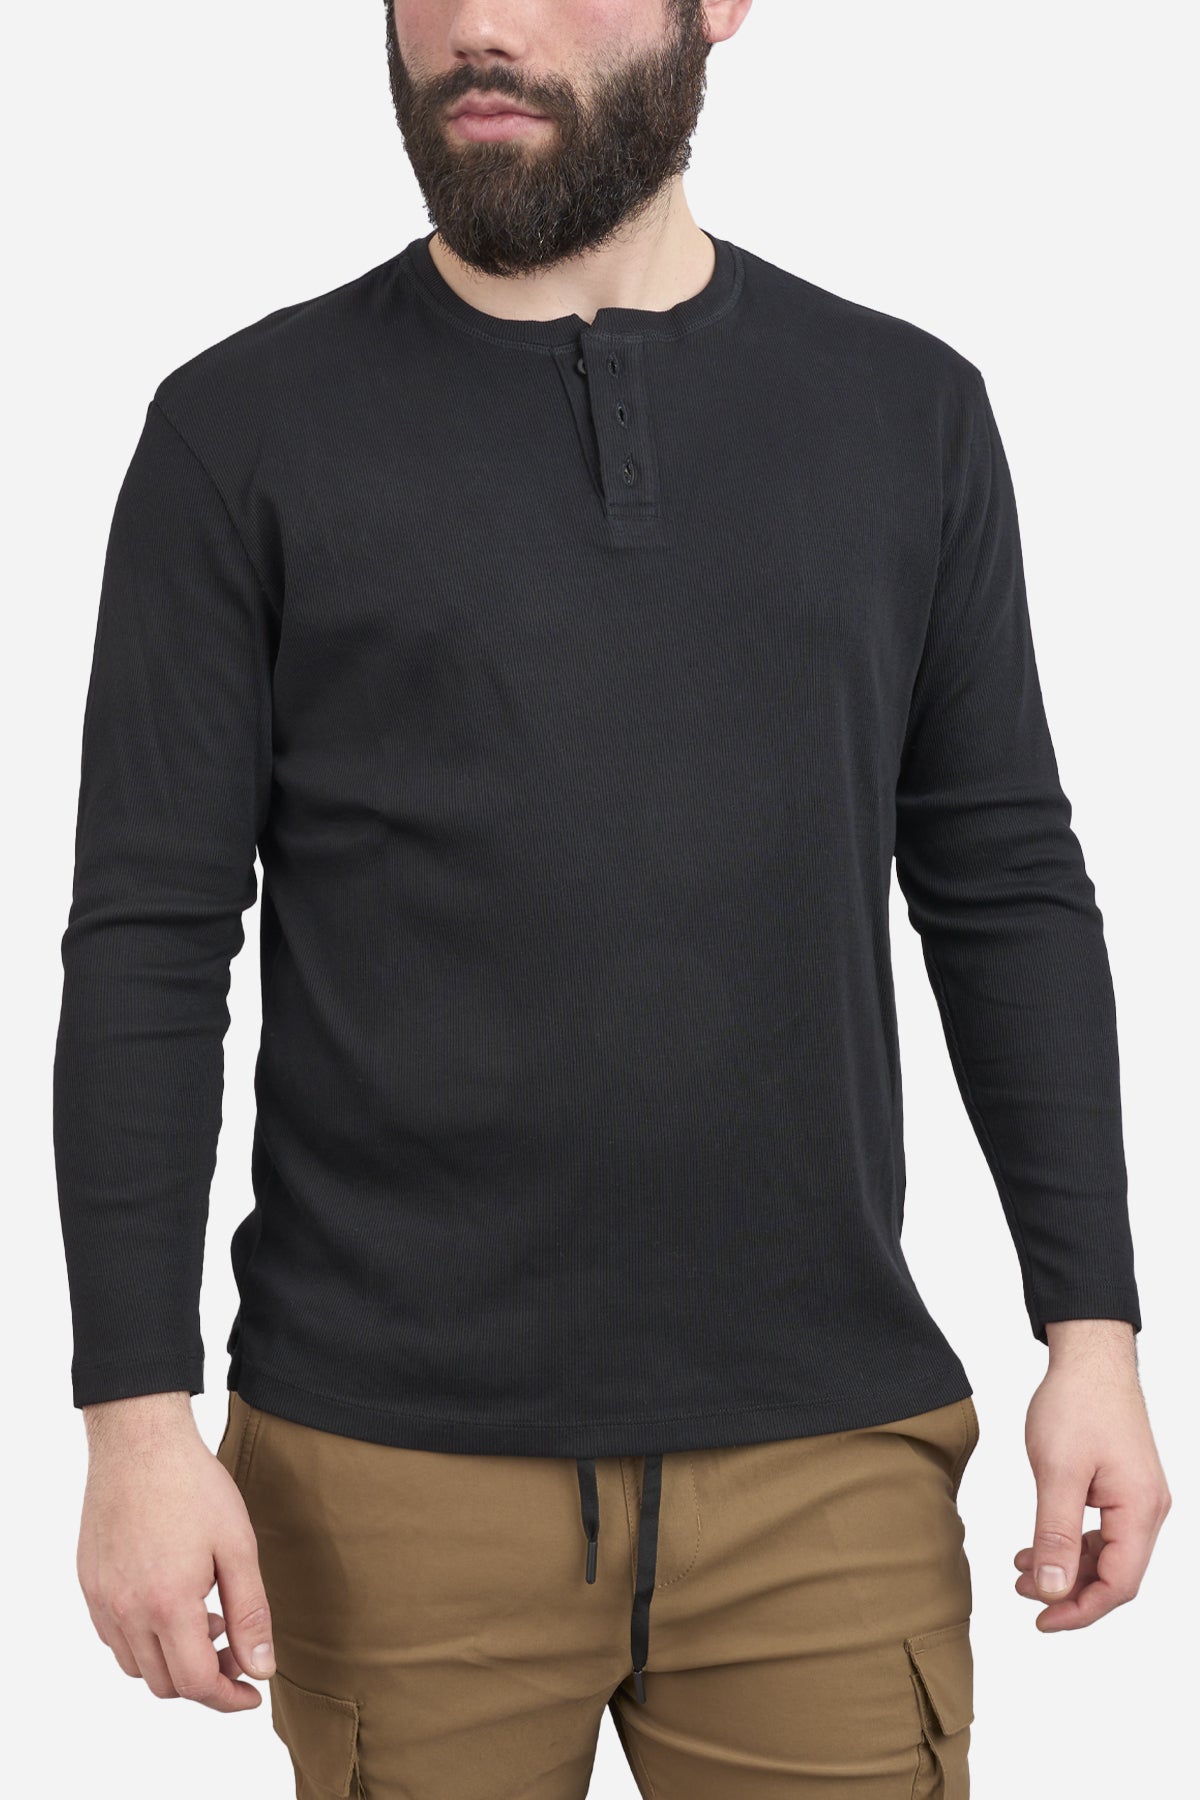 Black Short Sleeve Thermal T-Shirt Shop Now